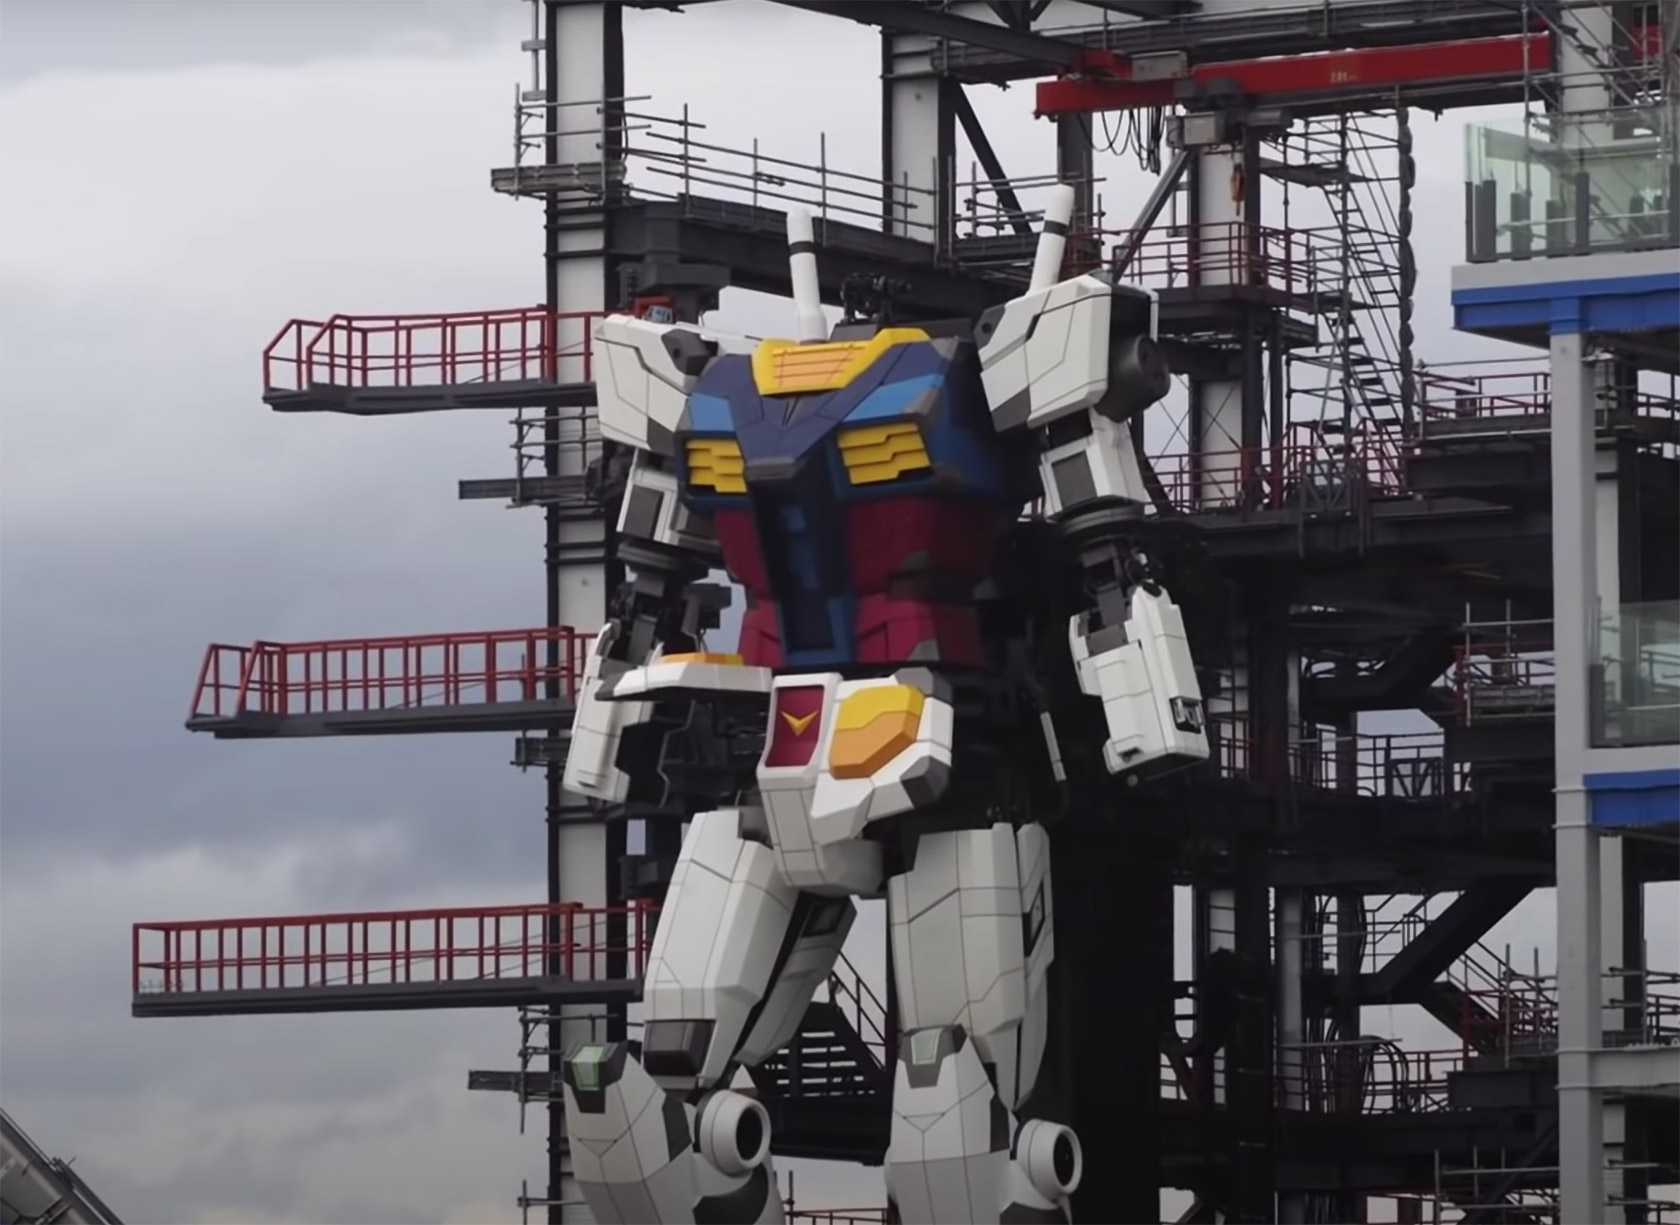 Gundam Mecha Robot Life-Sized Japan